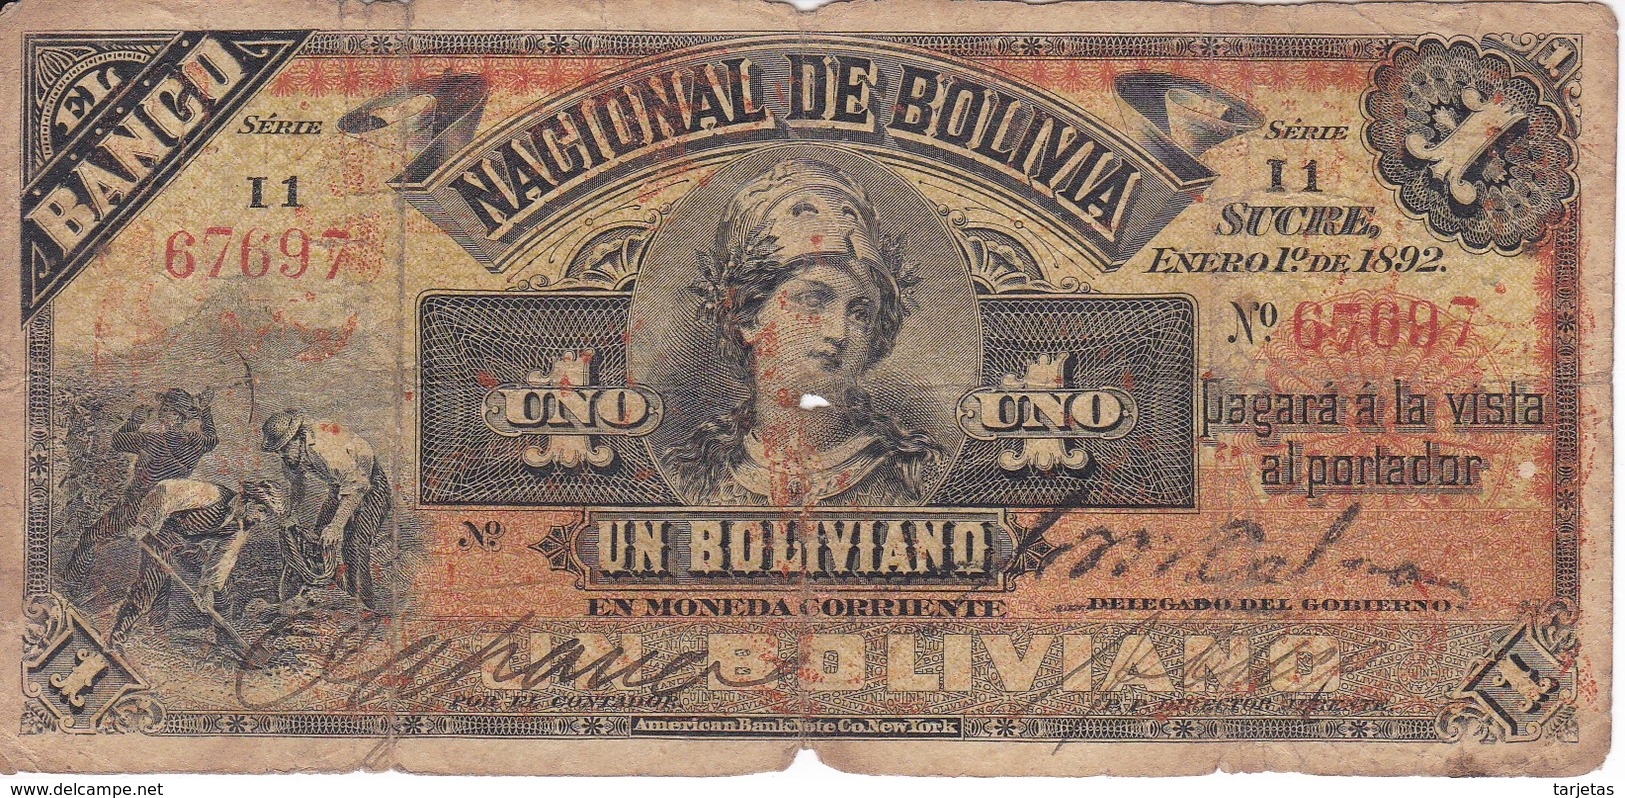 BILLETE DE BOLIVIA DE 1 BOLIVIANO DEL AÑO 1892 SERIE I1 (BANKNOTE) - Bolivien